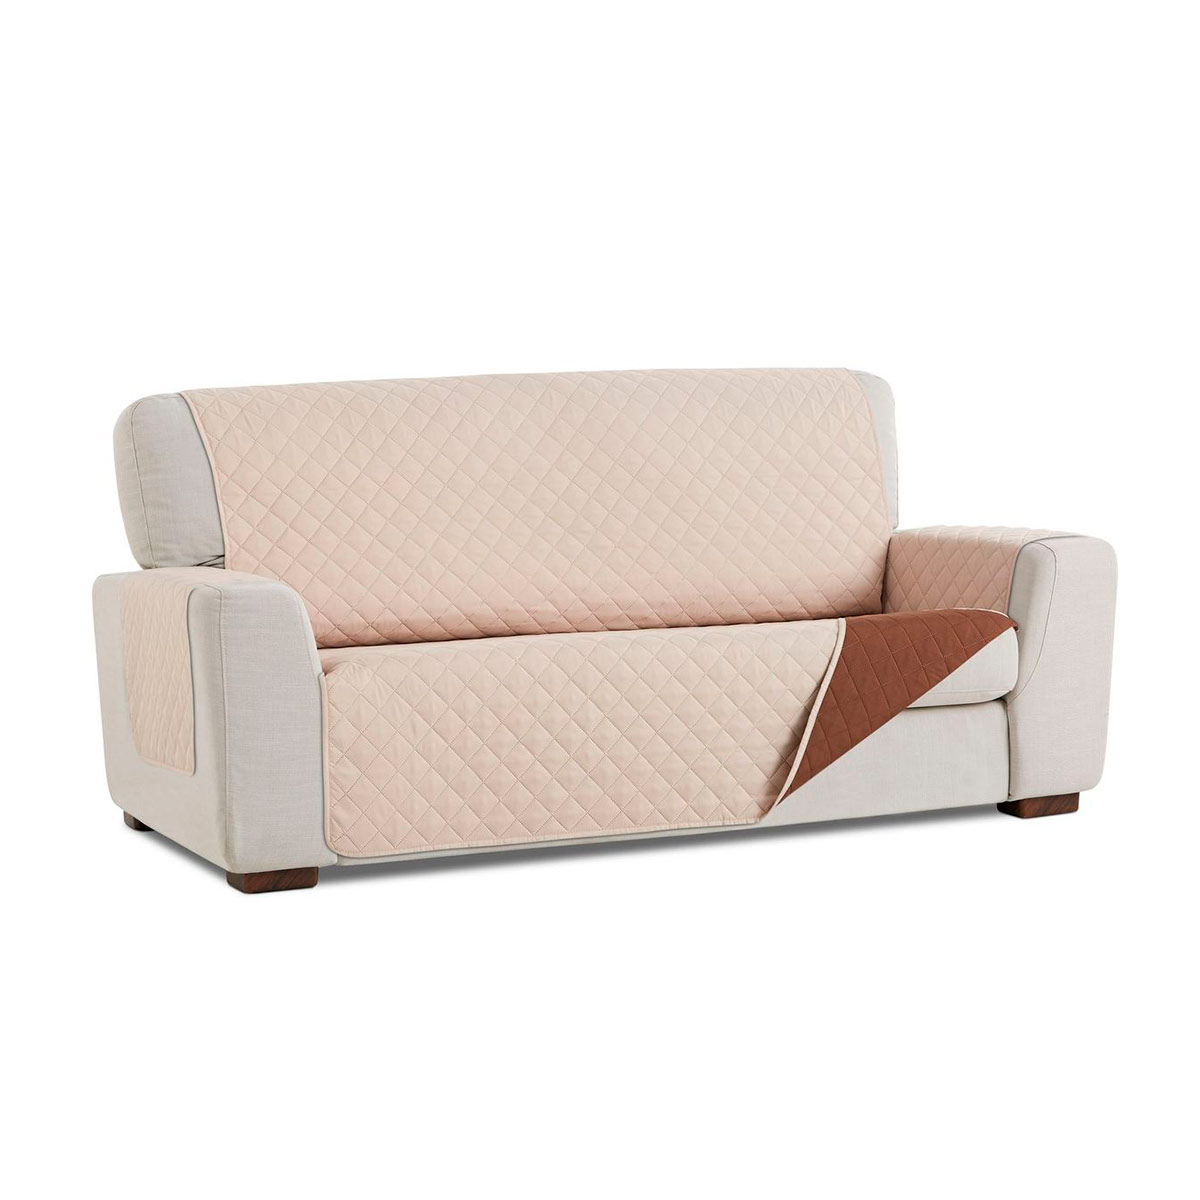 Cubre sofa Beige marron fondo blanco